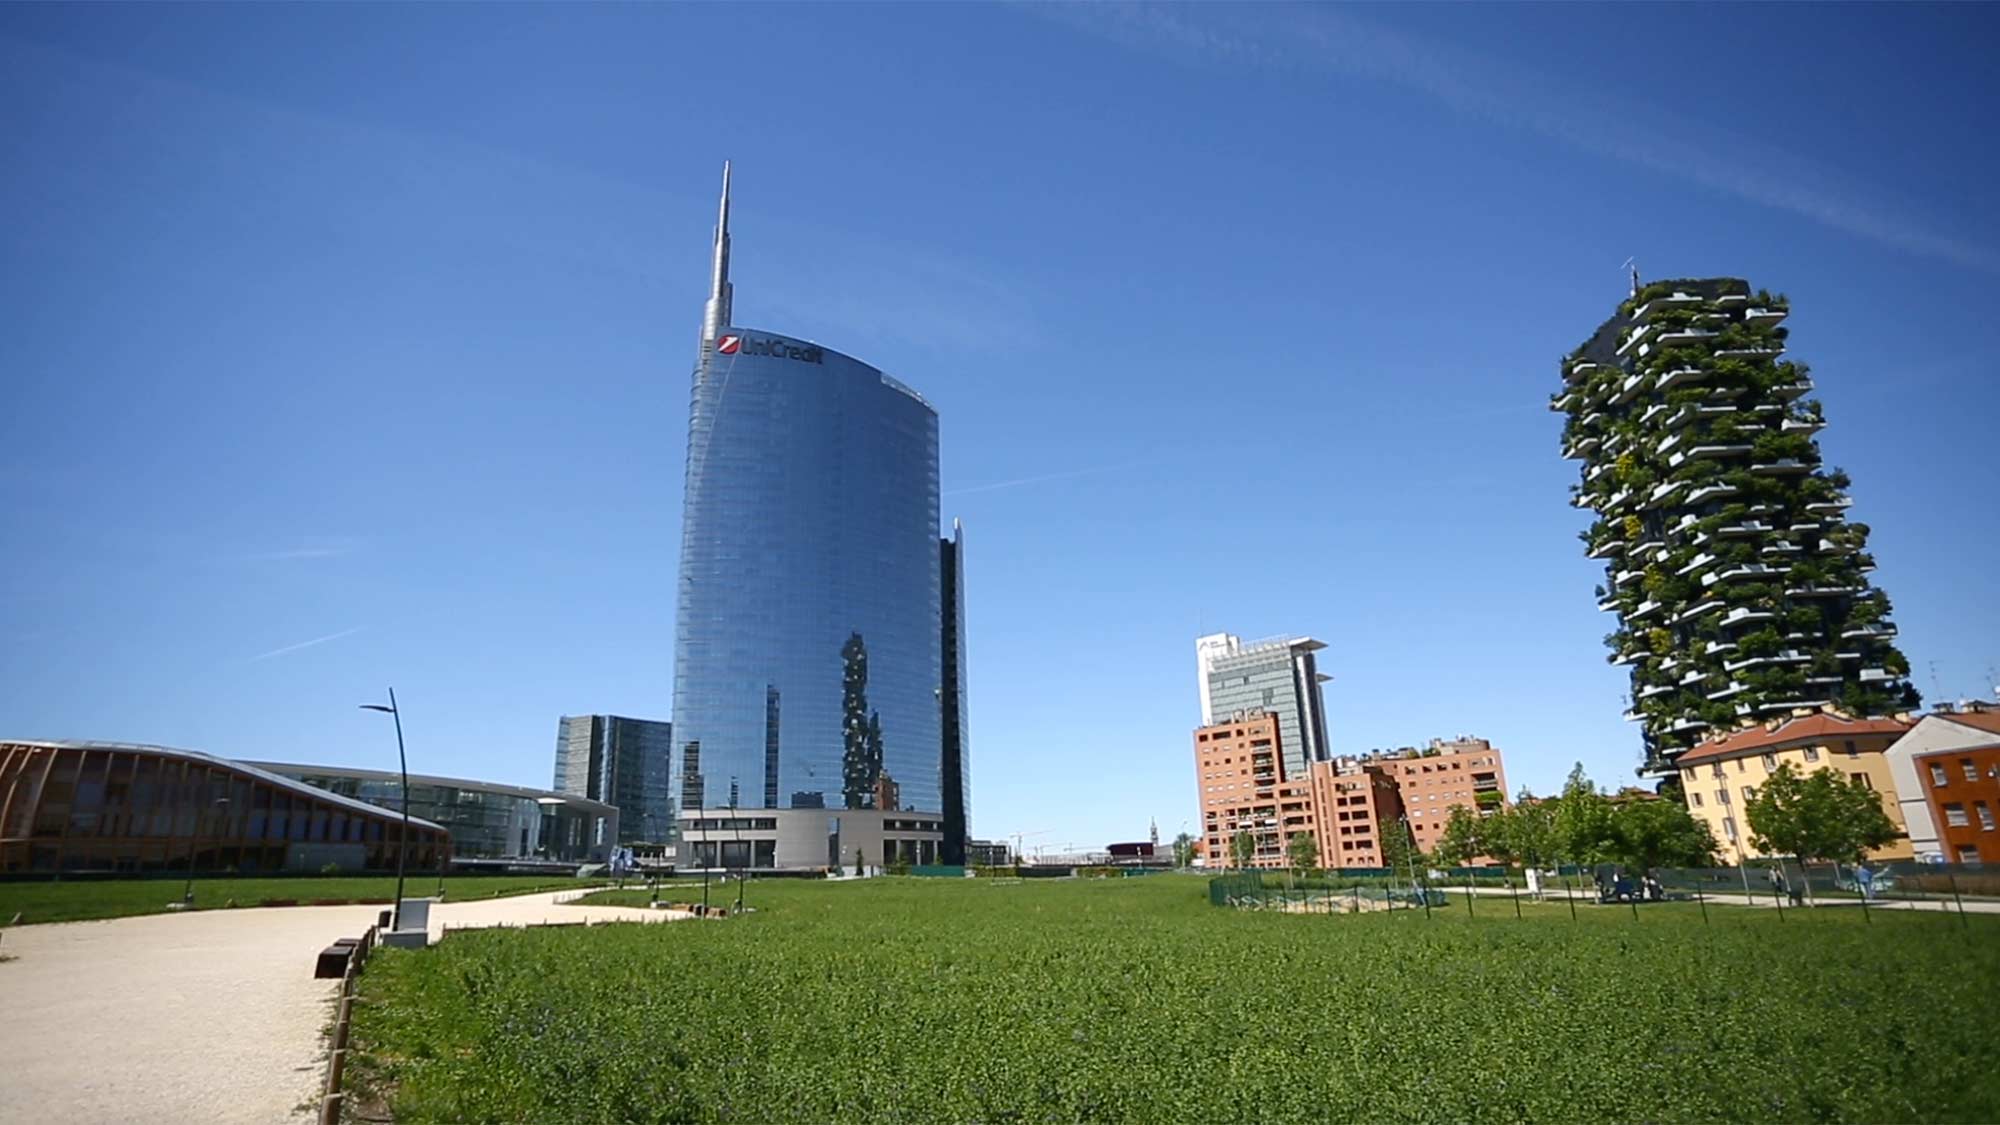 Bosco Verticale situated within the Porto Nuevo development, Milan 